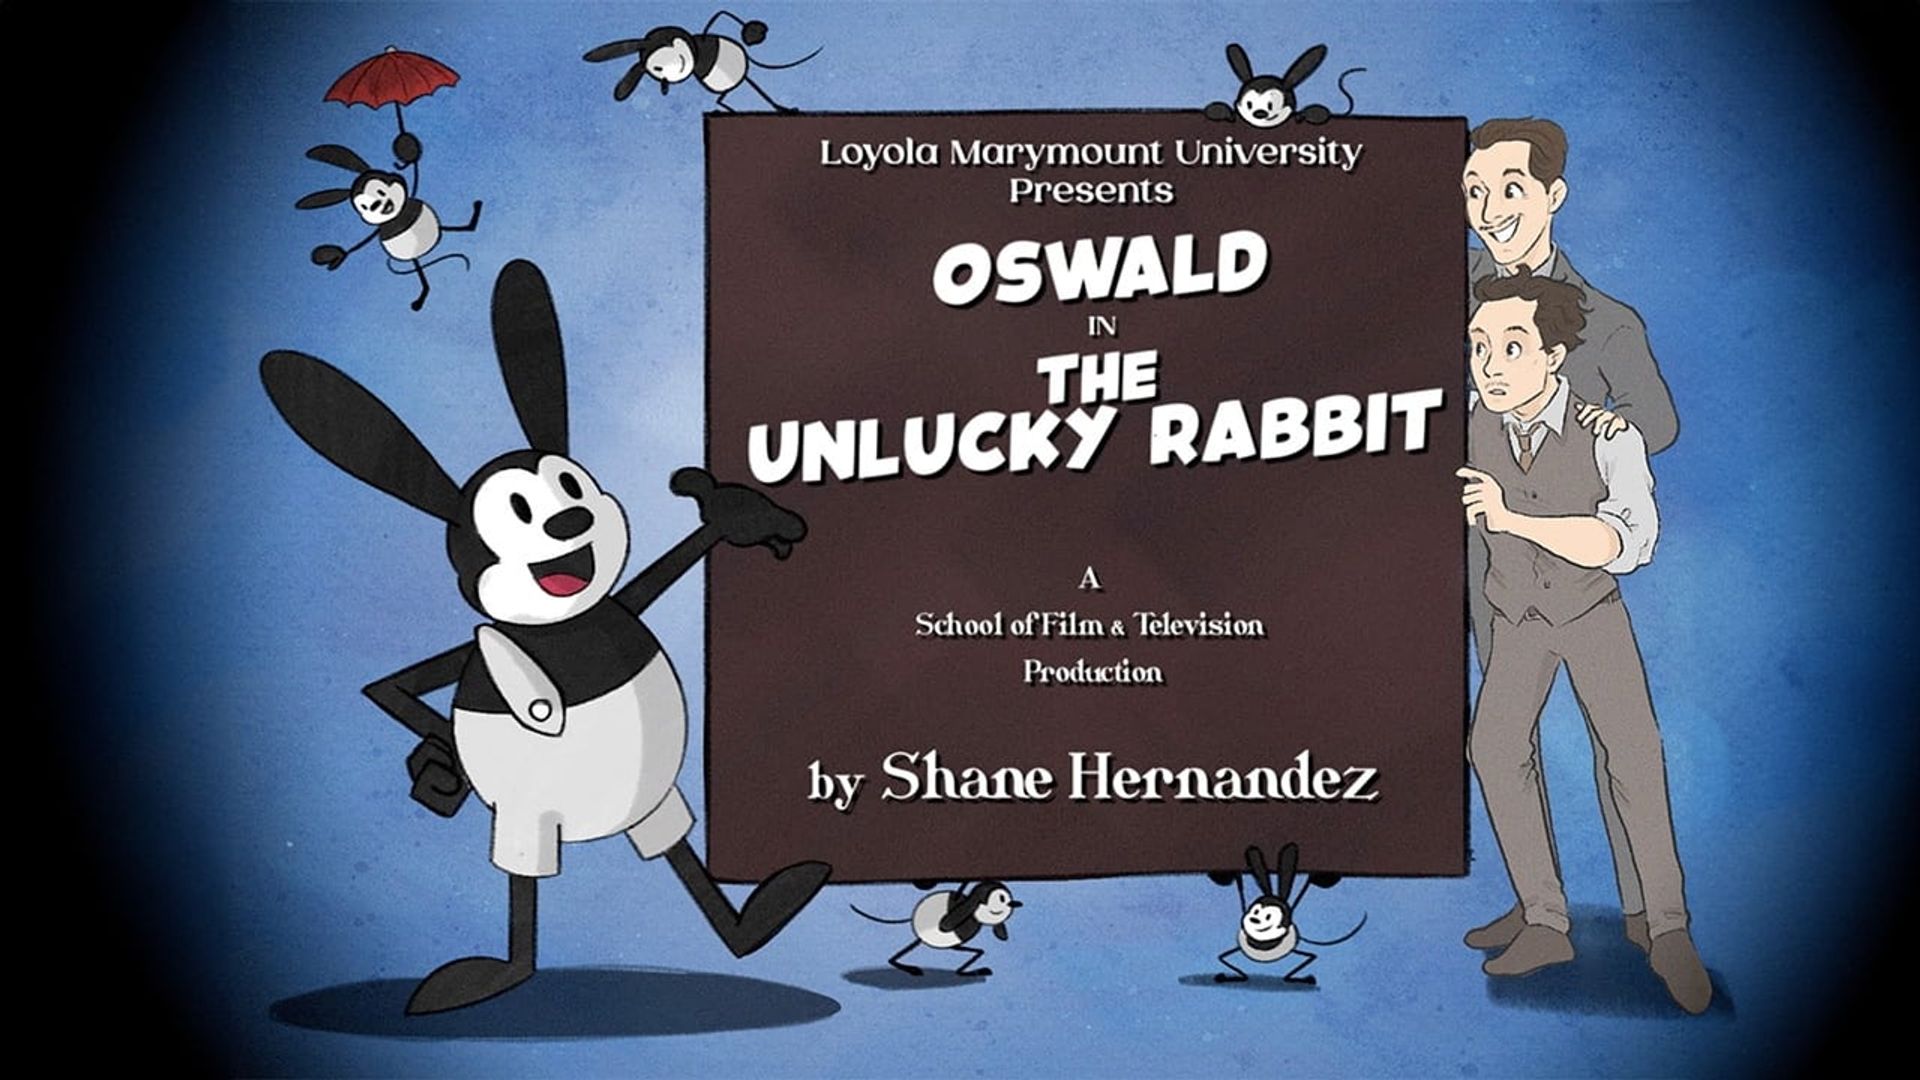 The Unlucky Rabbit background